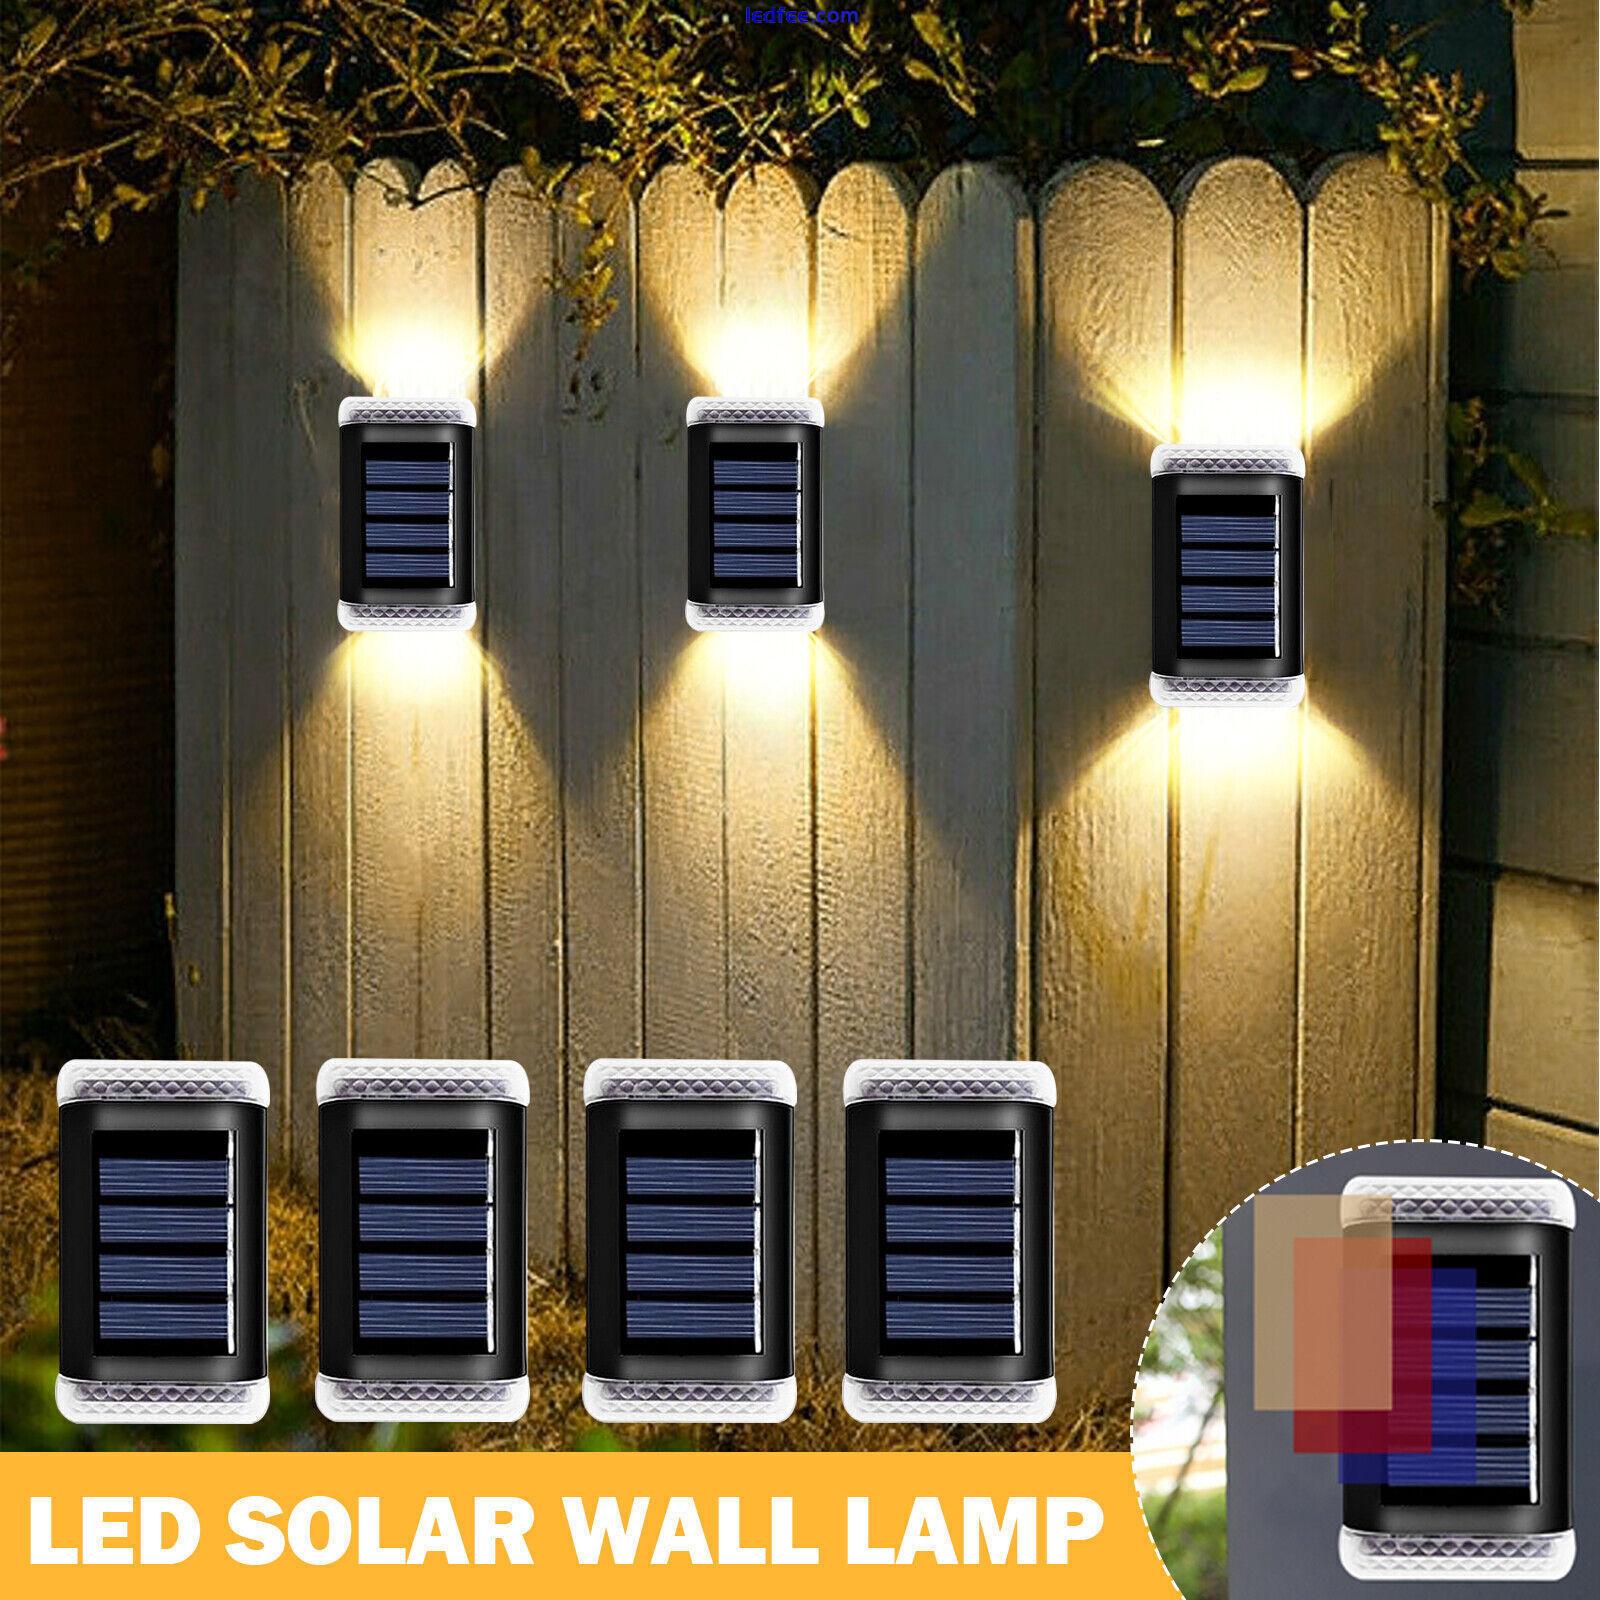 4-20Pcs LED Solar Wall Lights Outdoor Garden Fence Yard Street Lamps Waterproof 1 